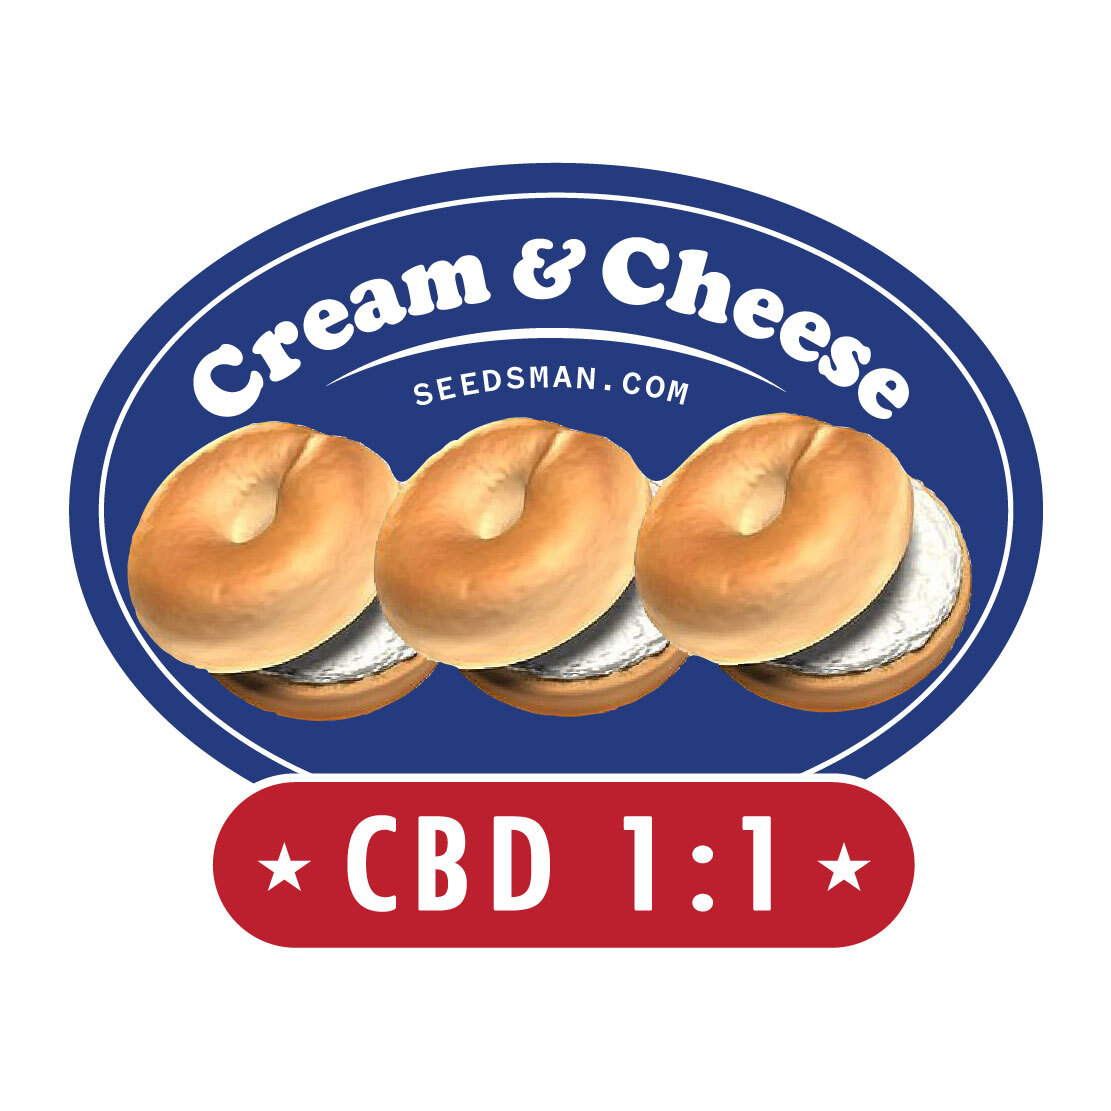 Seedsman - Cream and Cheese CBD 1:1 (fem.)